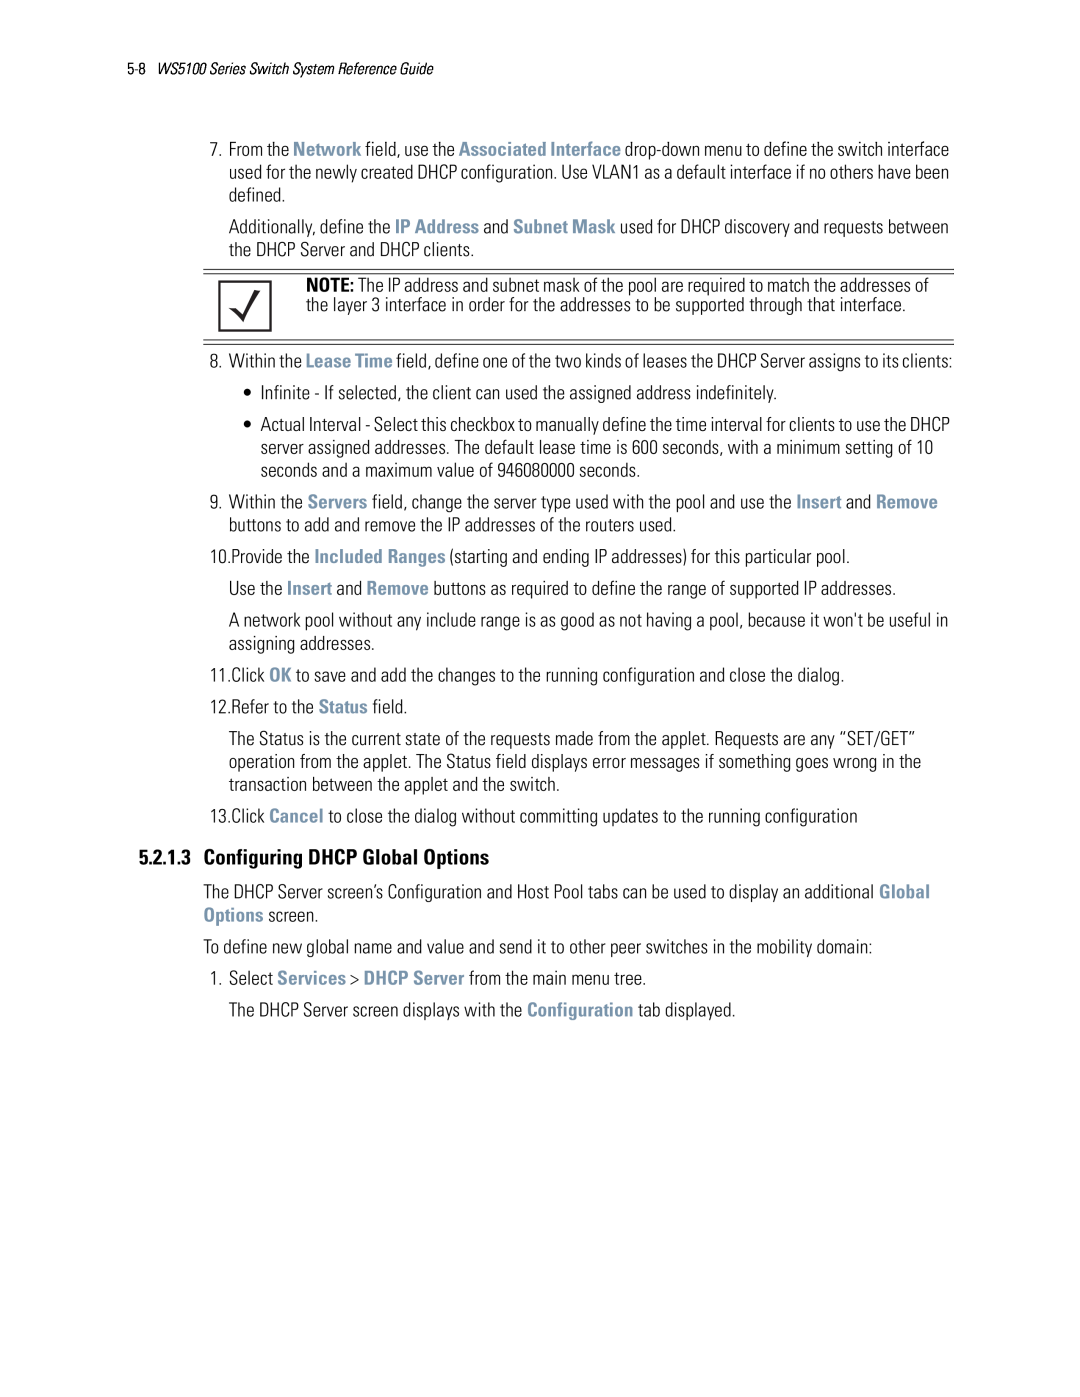 Motorola WS5100 manual 5.2.1.3Configuring DHCP Global Options 